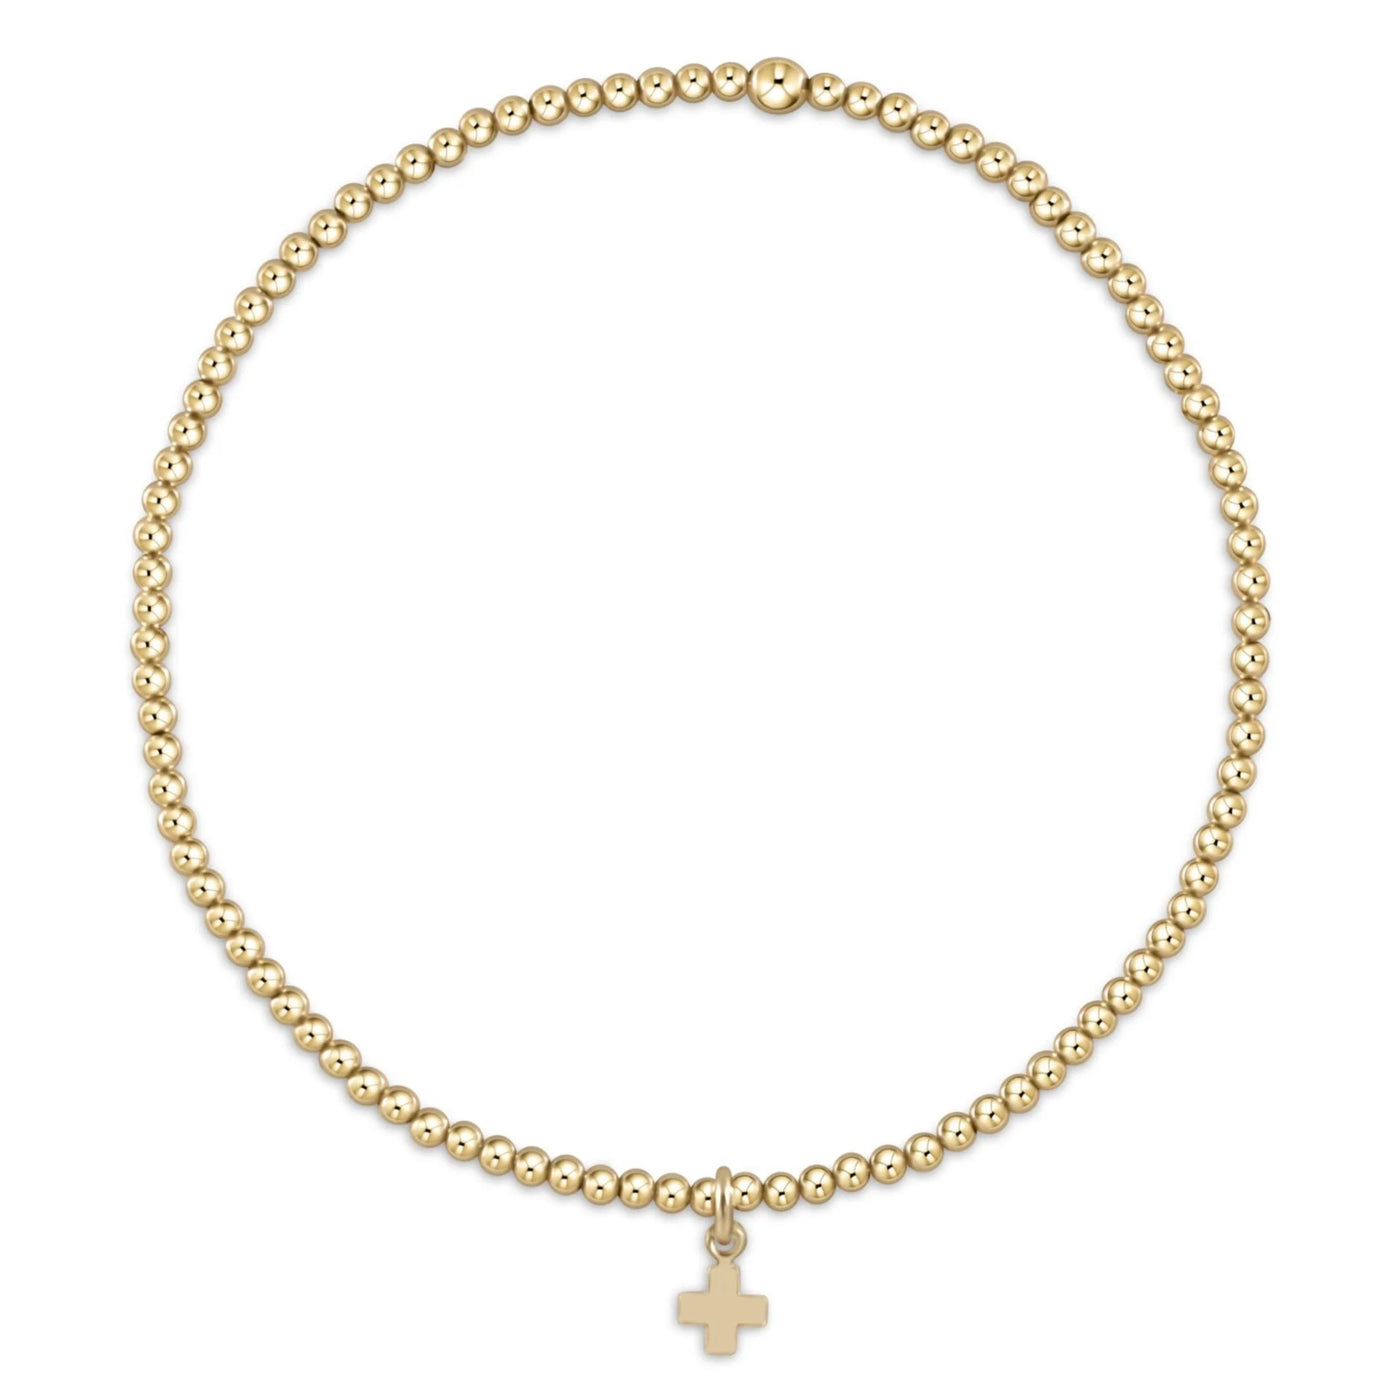 Enewton classic gold 2mm bead bracelet - signature cross small gold charm